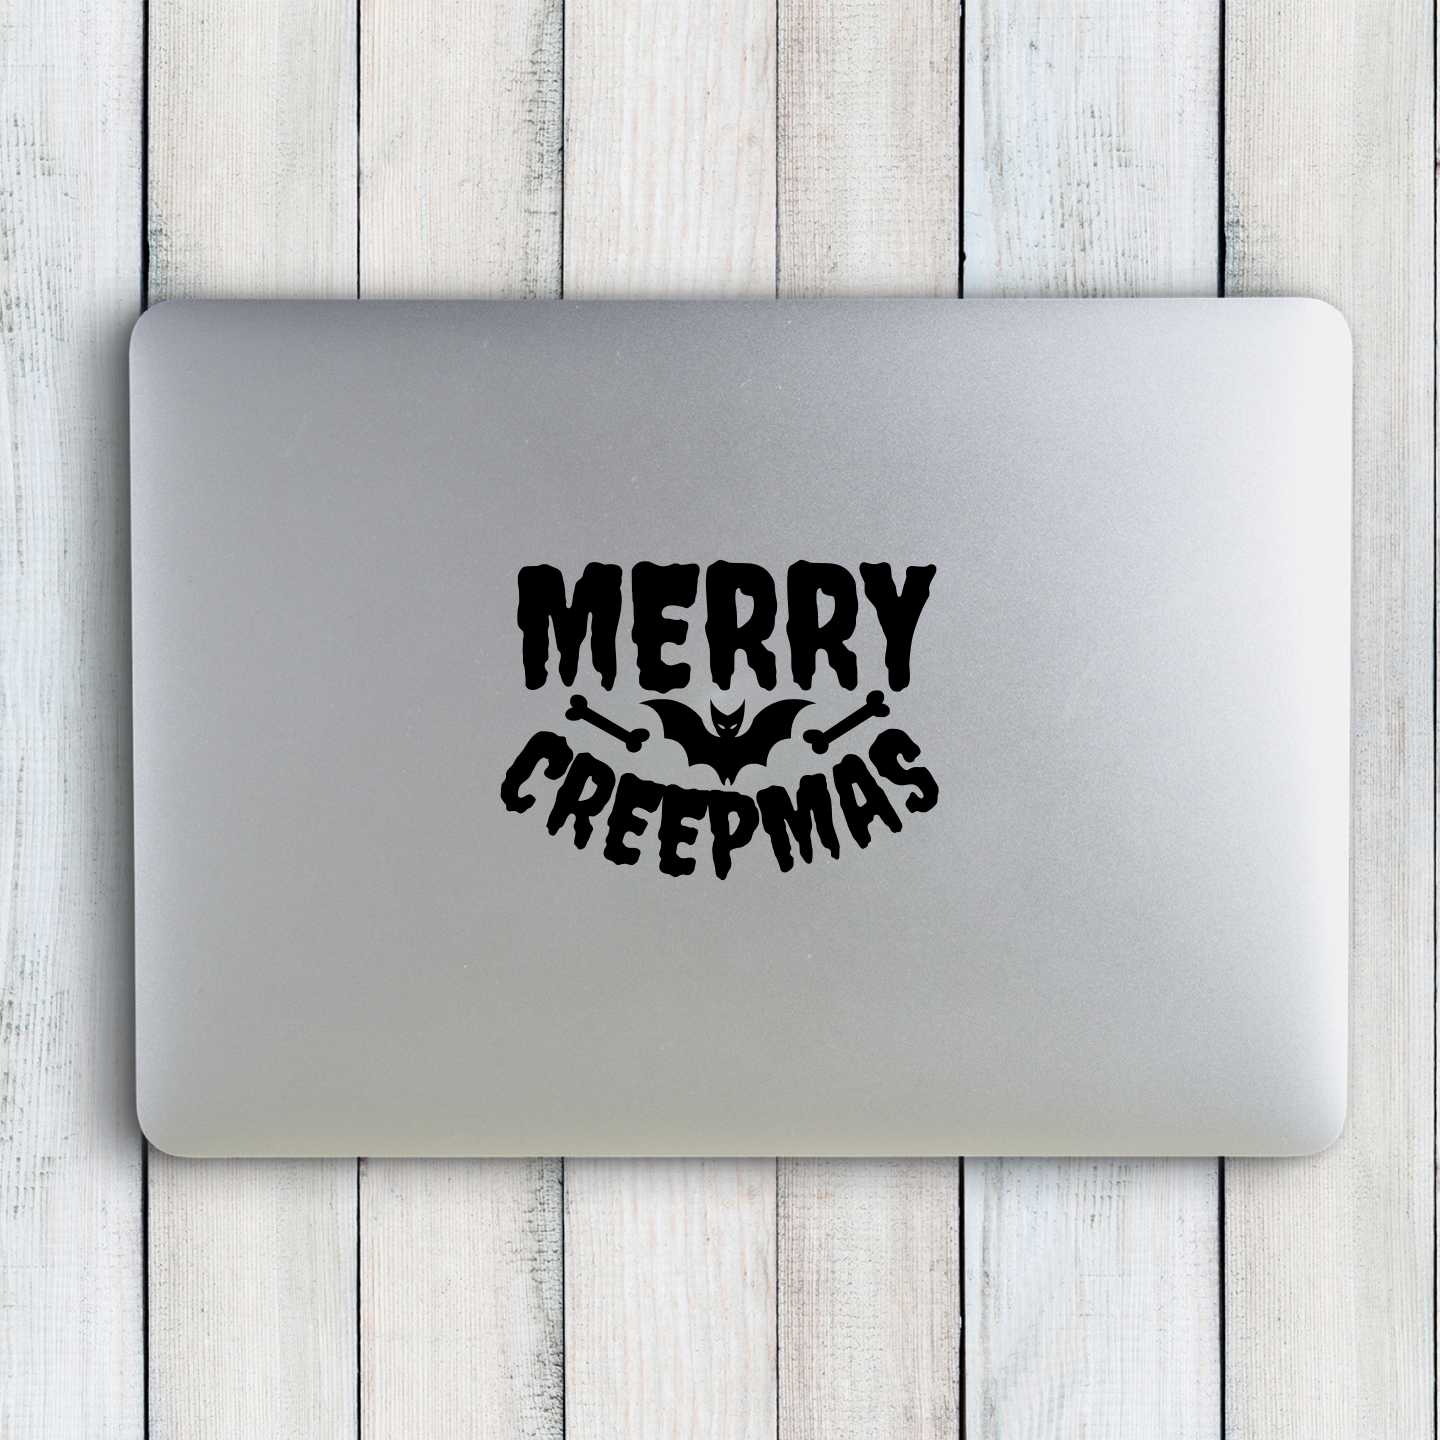 Merry Creepmas Sticker